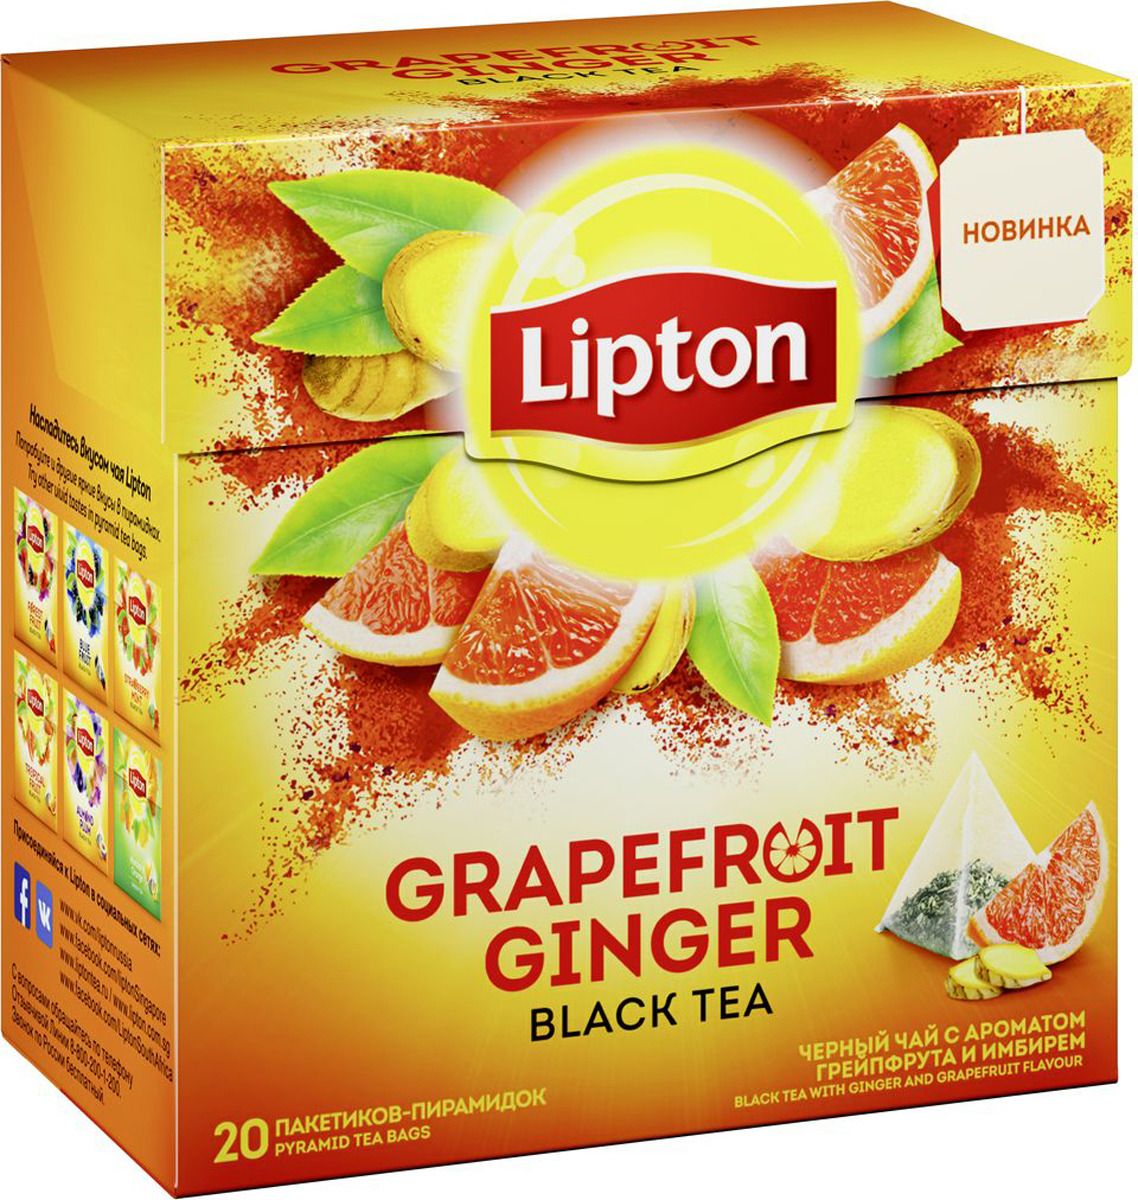    Lipton Grapefruit Ginger      , 20 